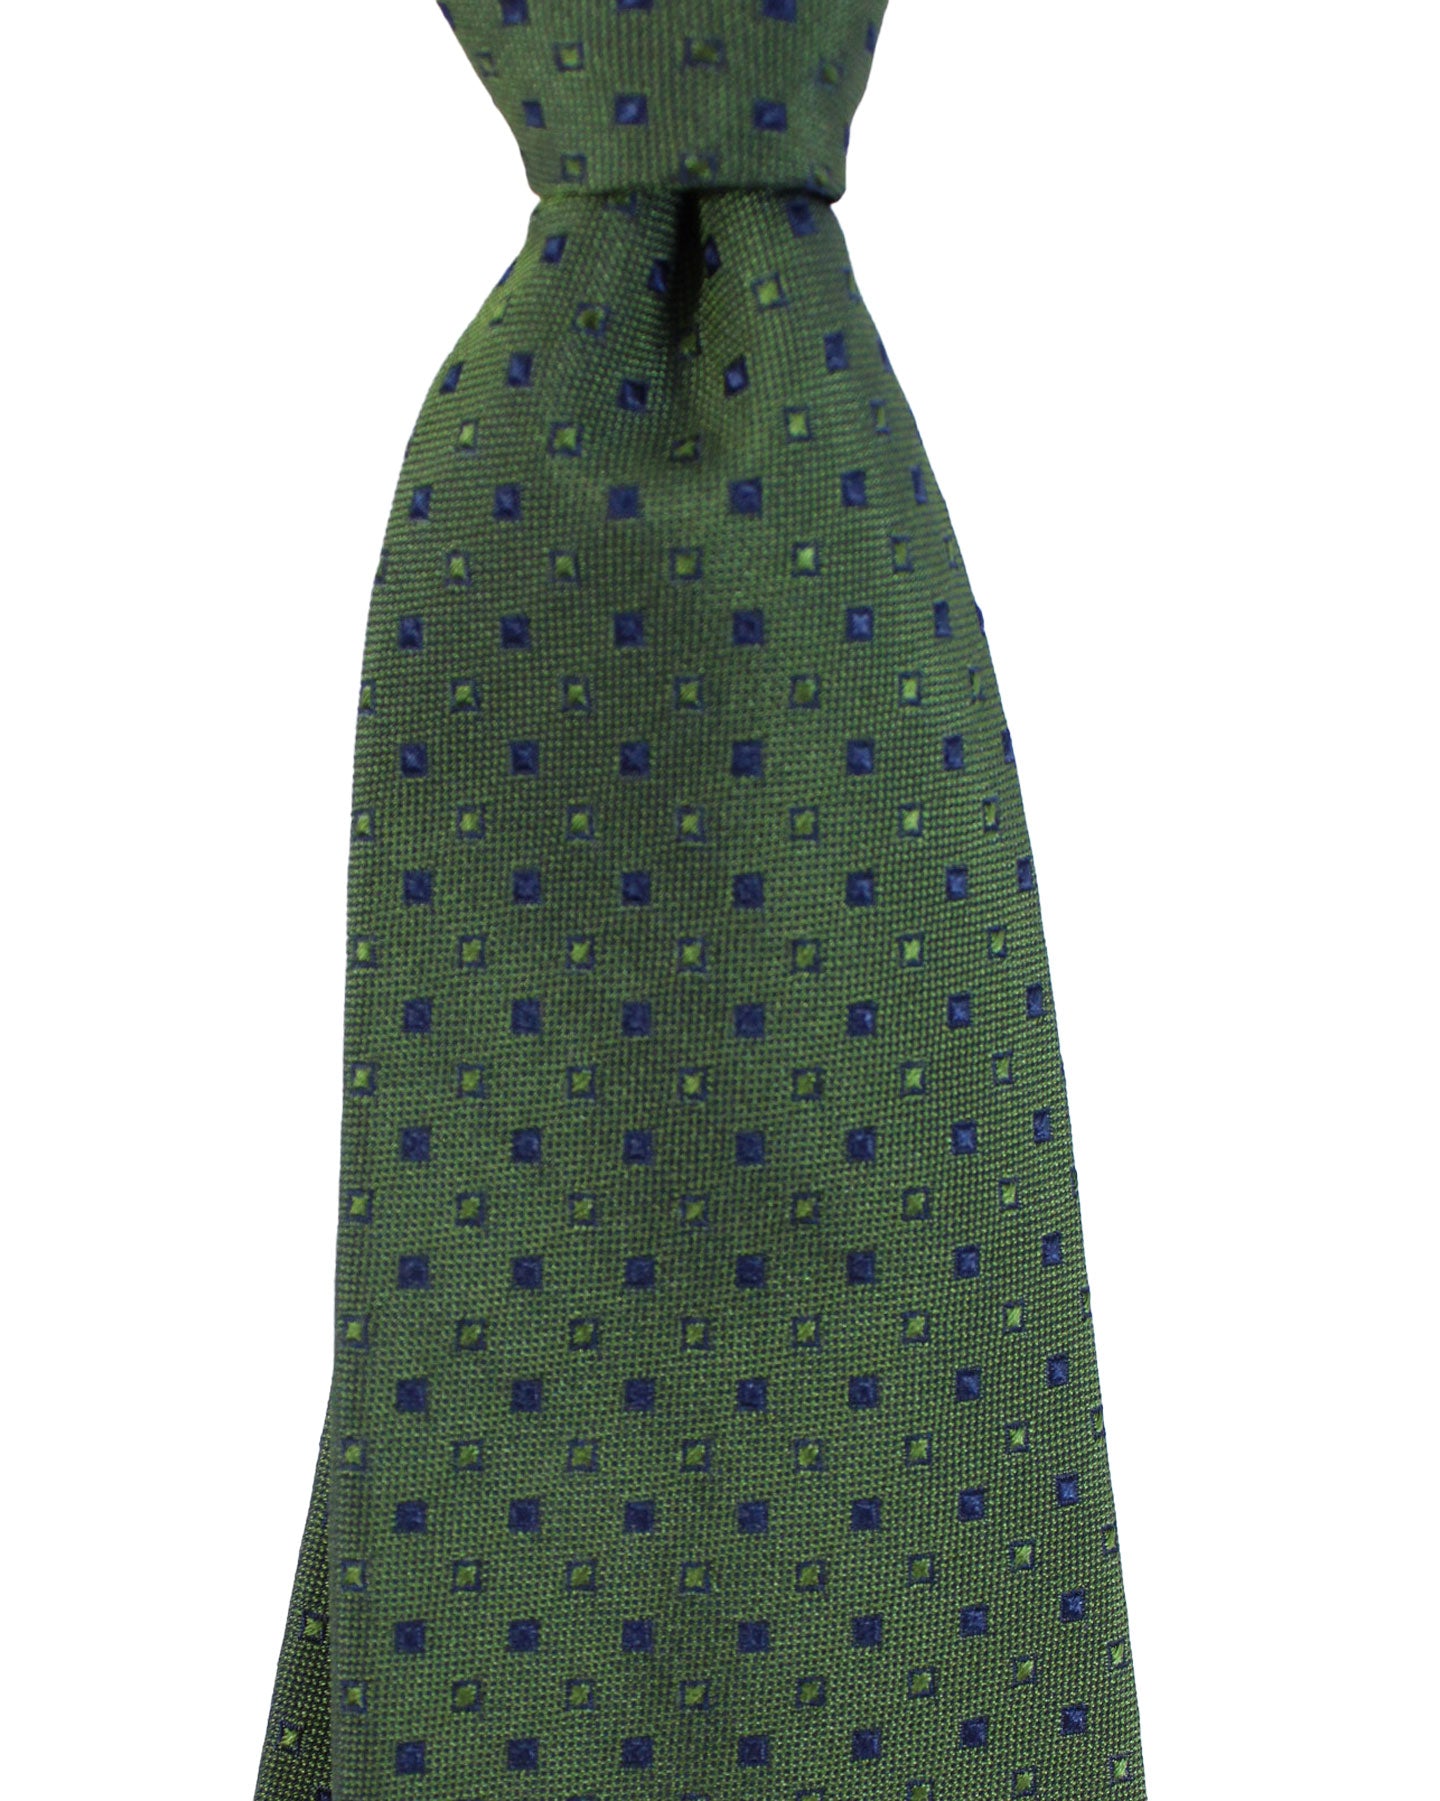 Massimo Valeri 11 Fold Tie Green Mini Squares - Elevenfold Necktie